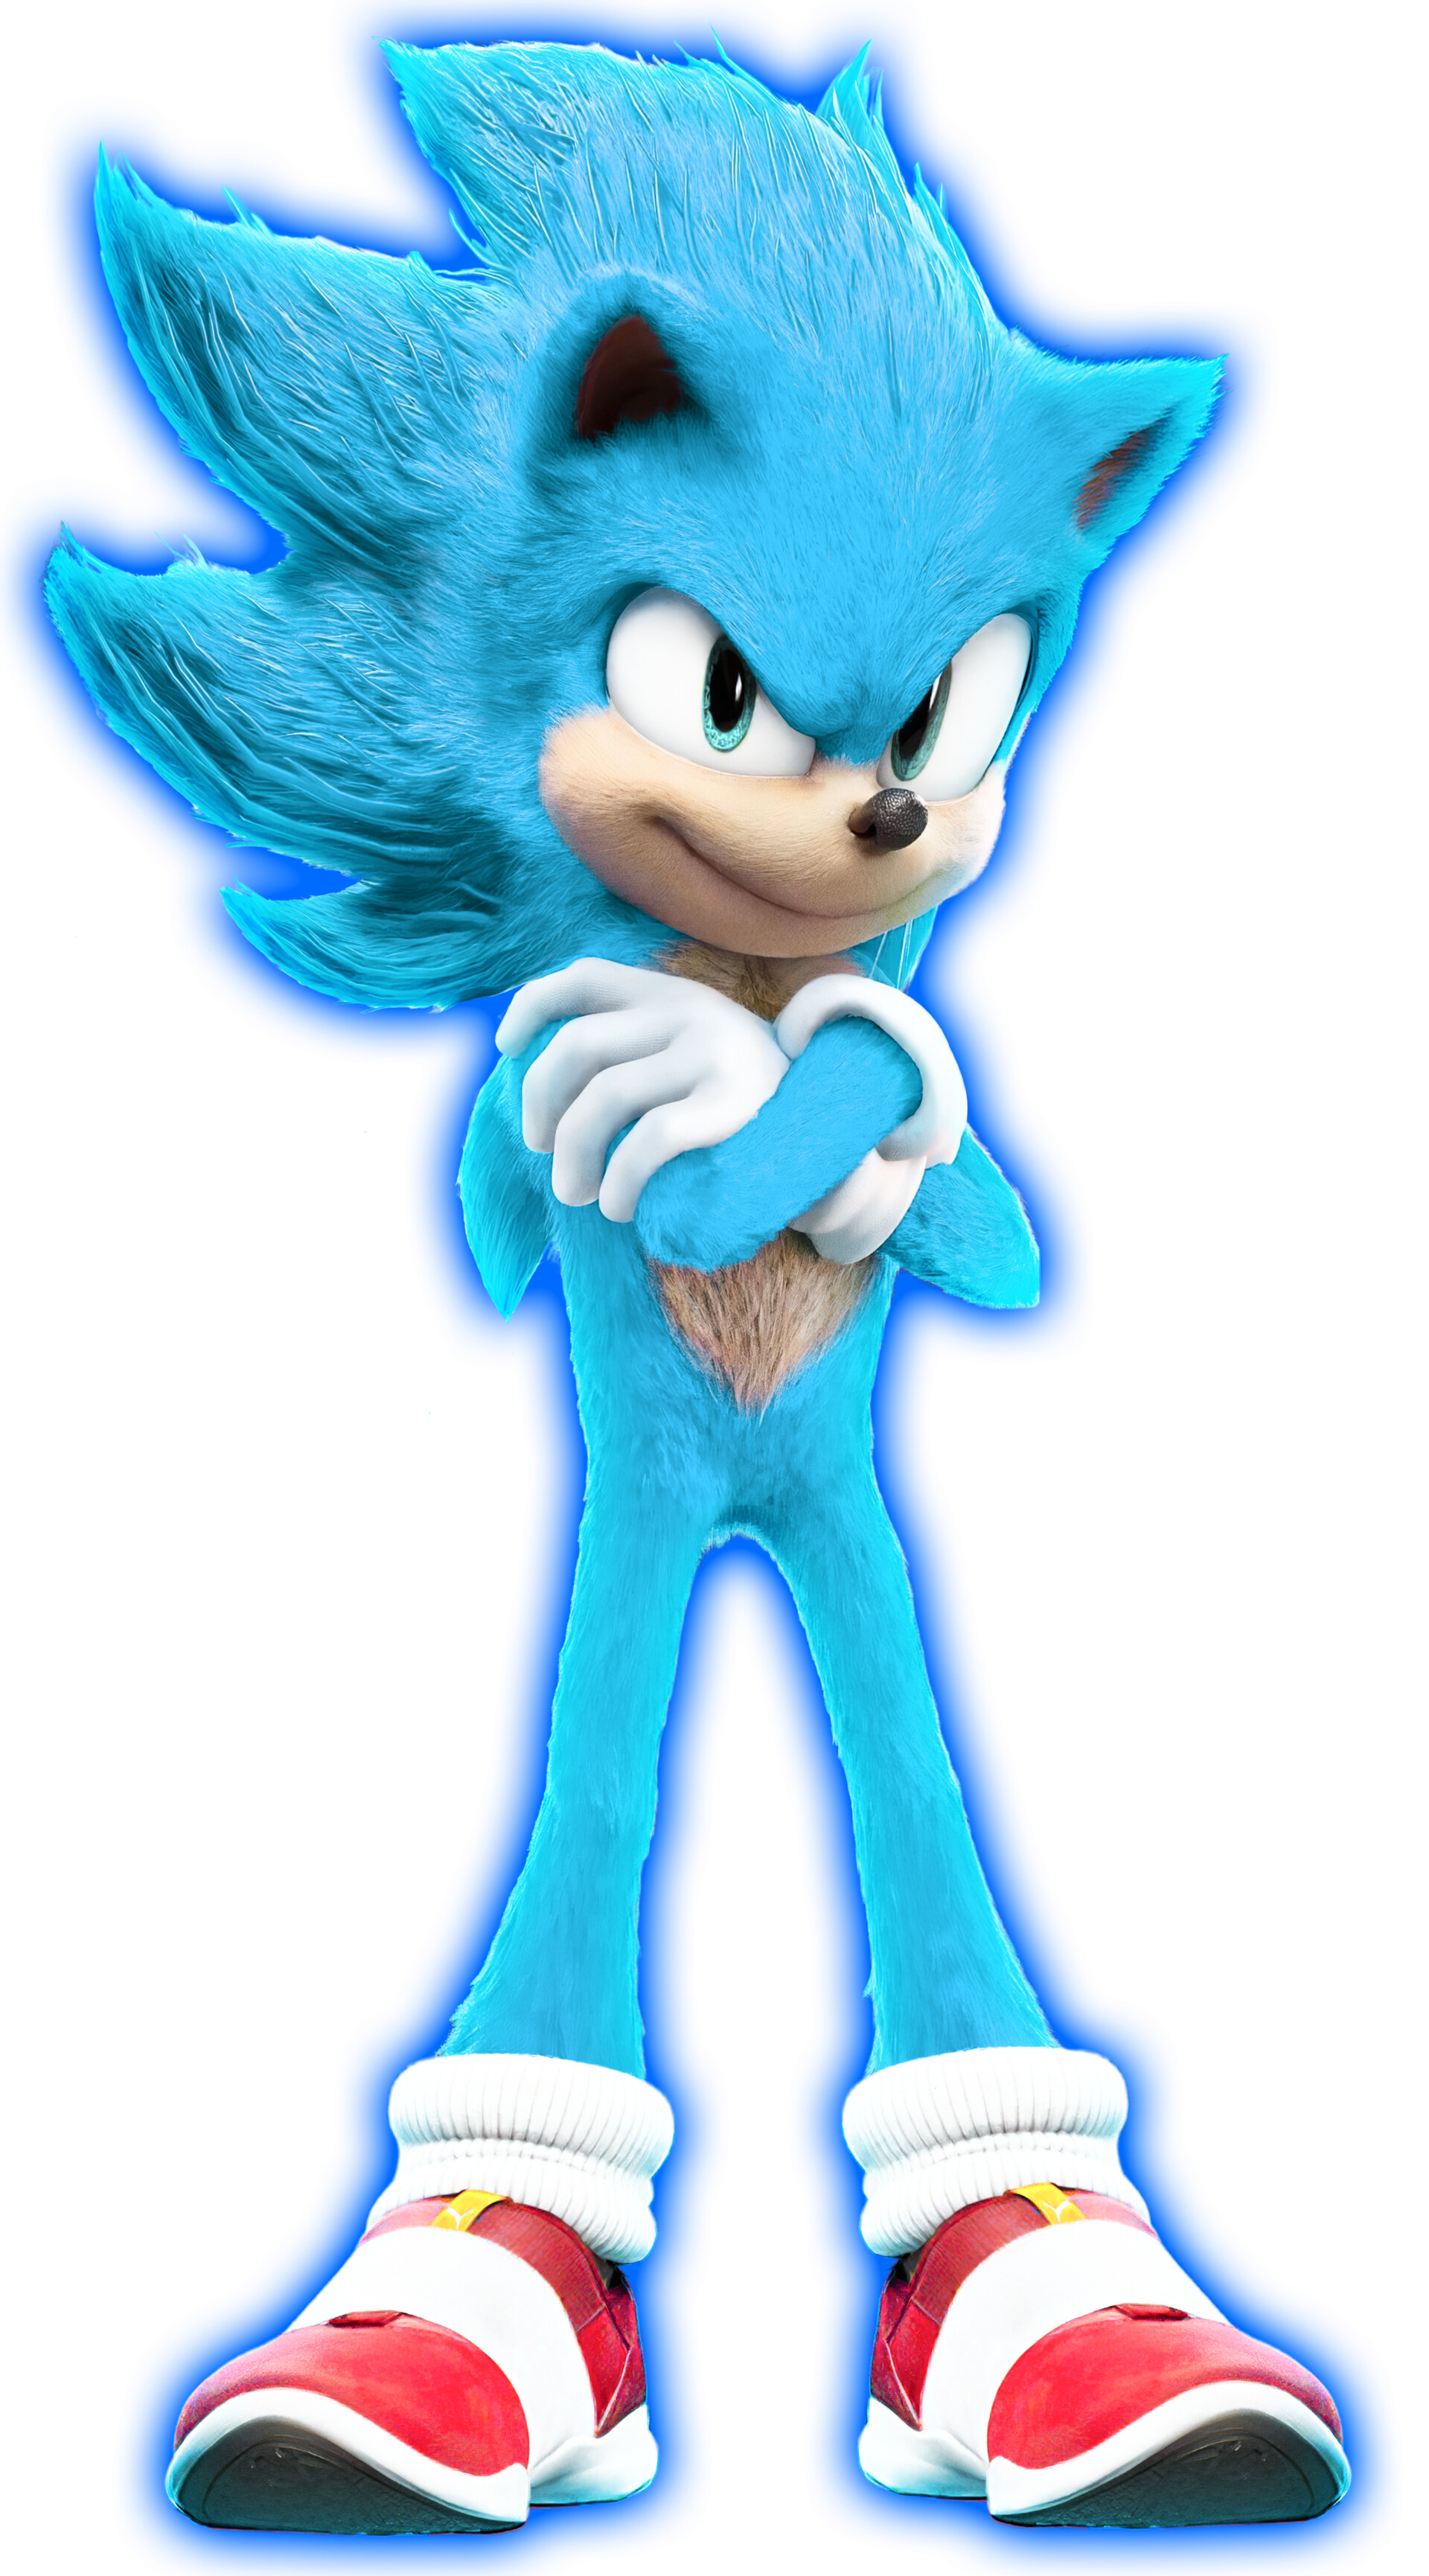 Custom / Edited - Sonic the Hedgehog Customs - Super Sonic (Sonic